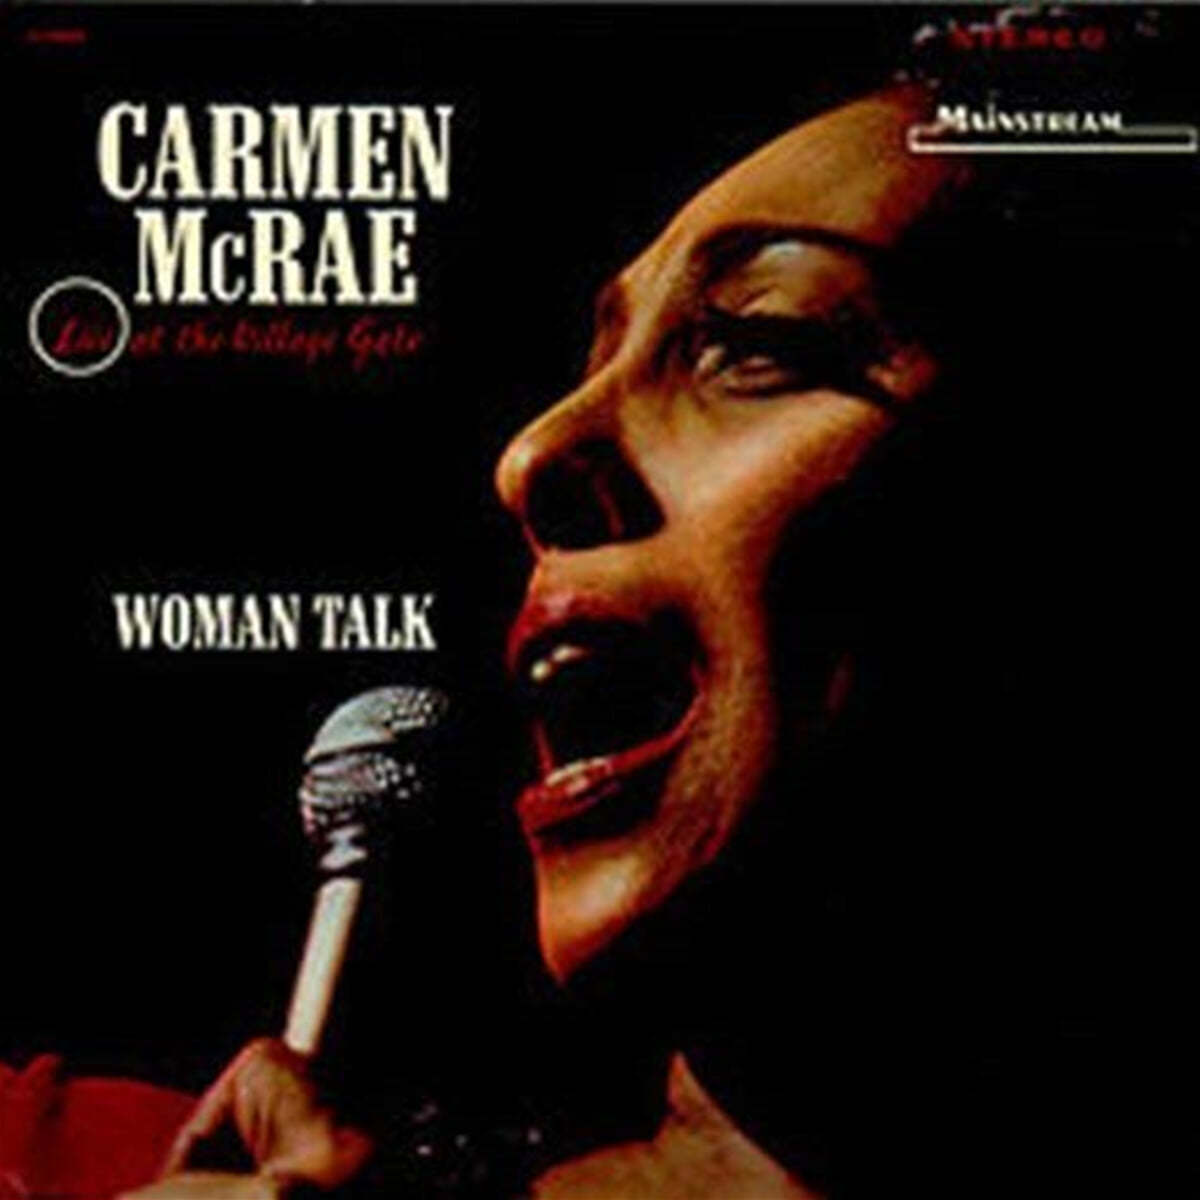 Carmen Mcrae (카르멘 맥레이) - Woman Talk (Live At The Village Gate)